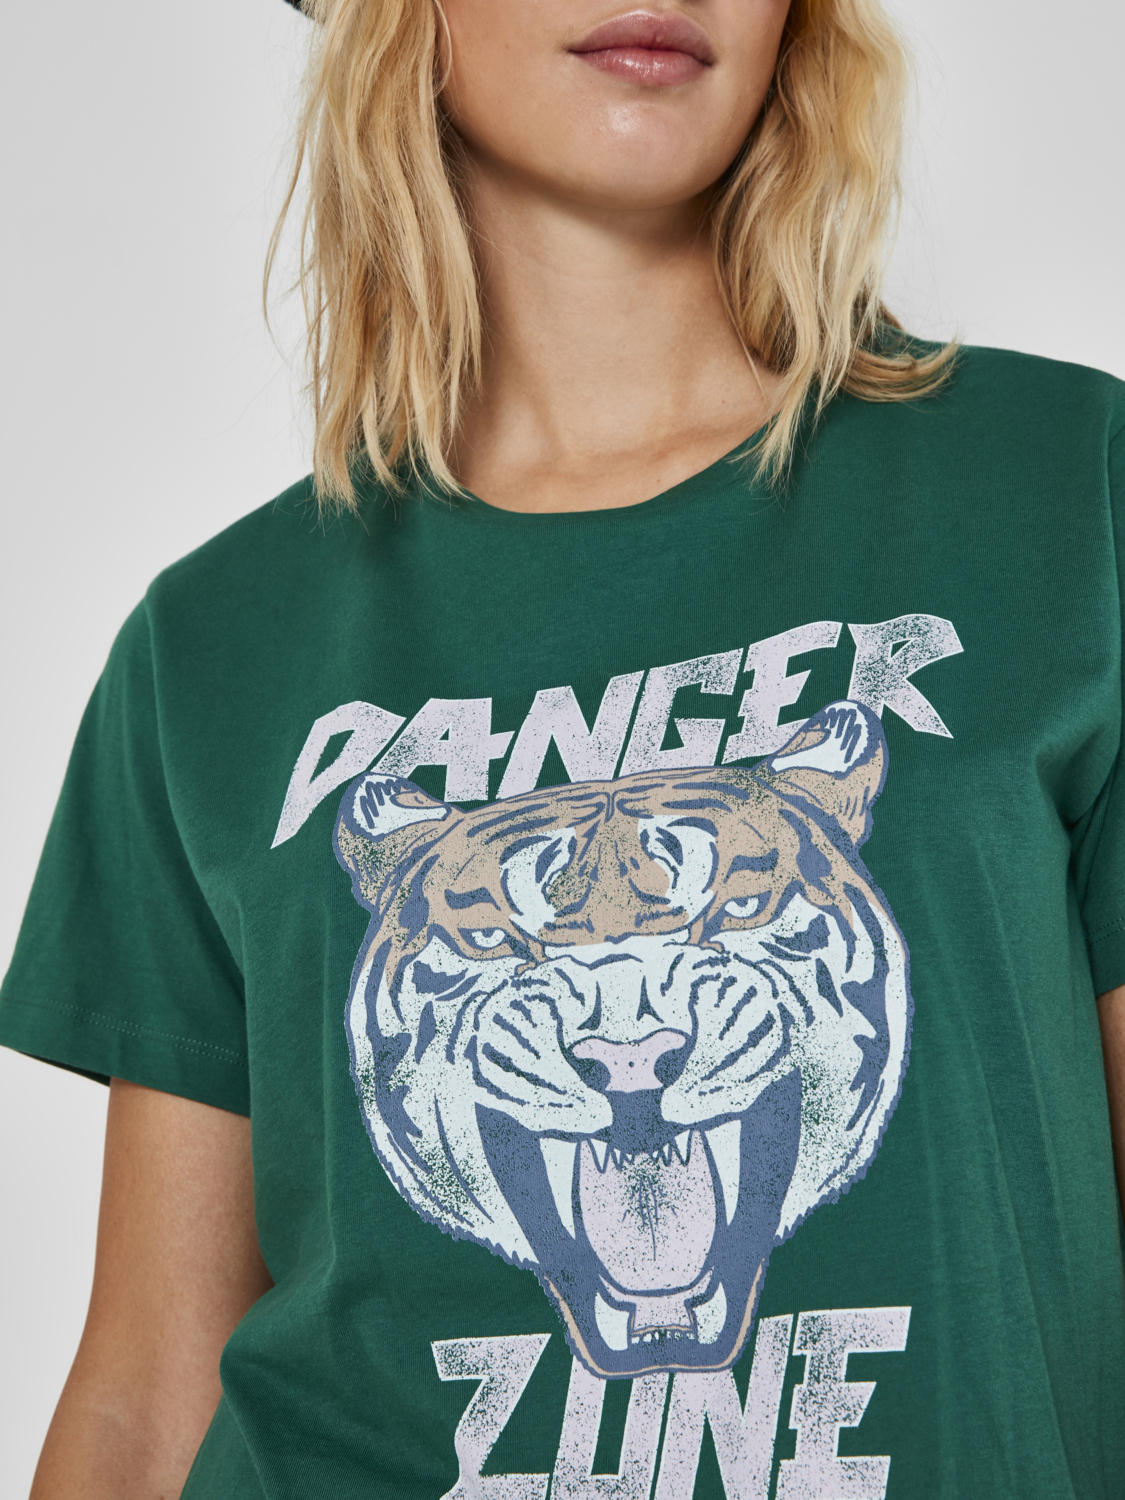 Camiseta Danger